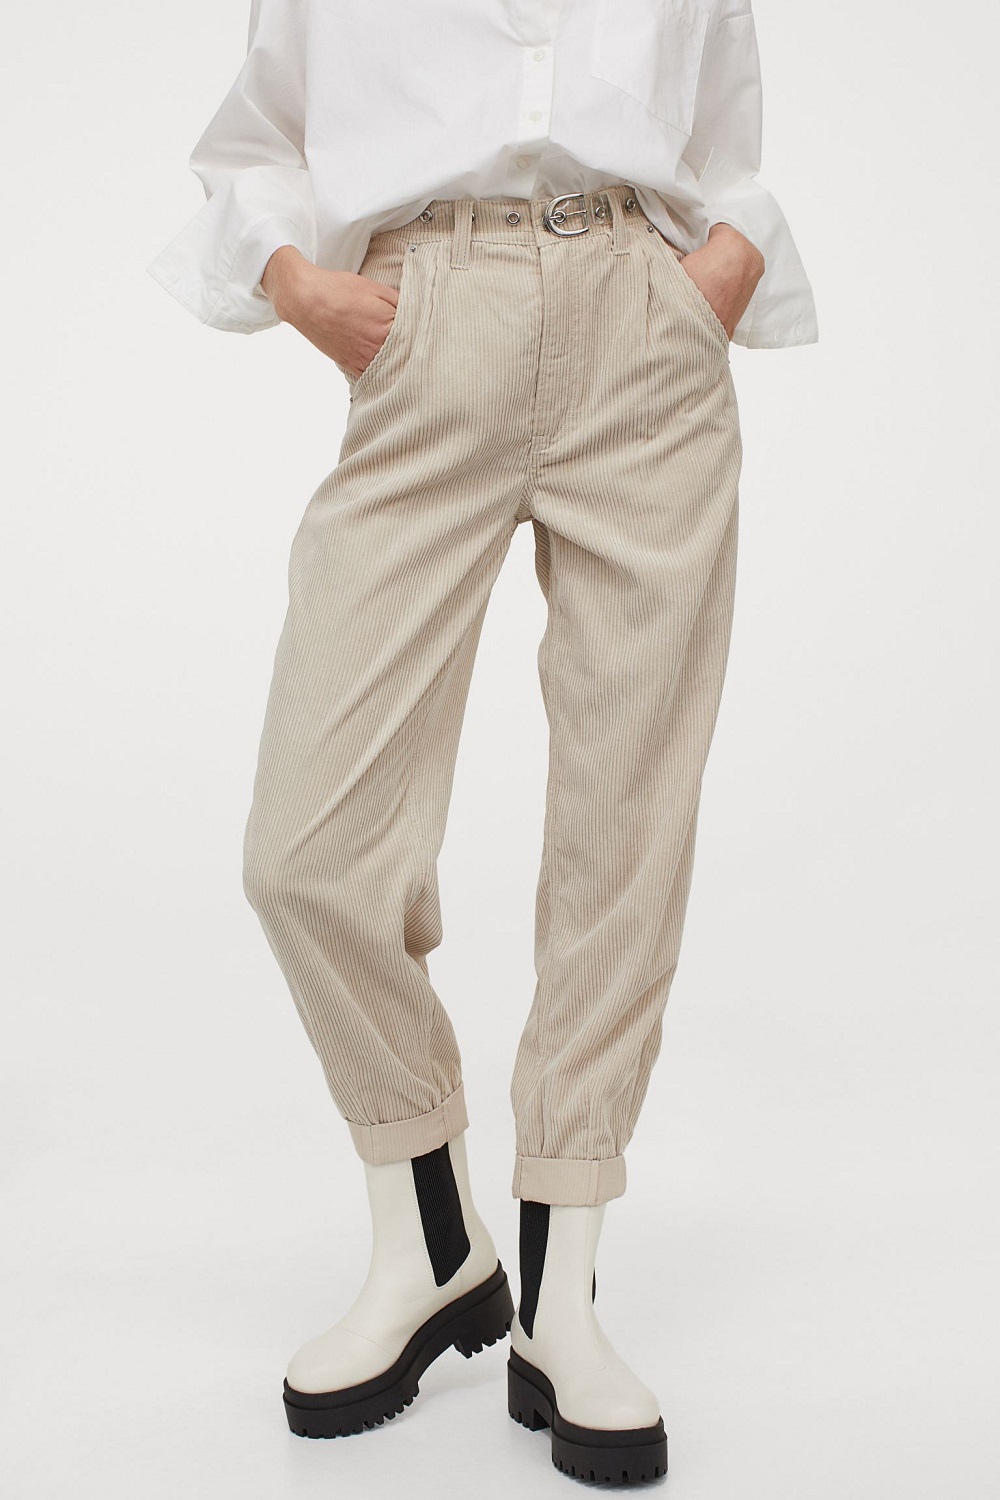 H&M hlače jesen 2020. 